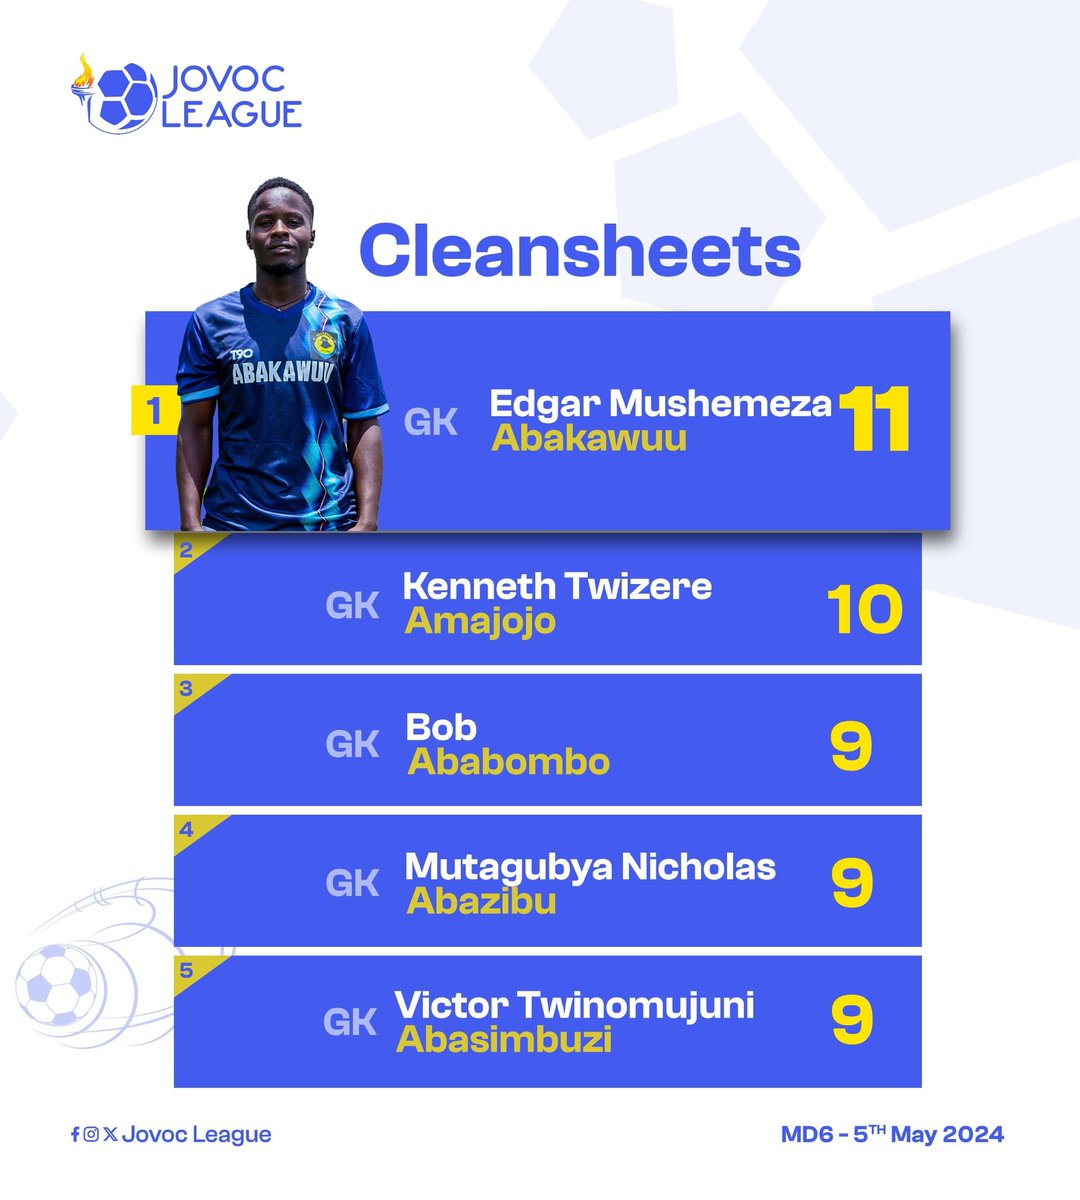 @abakawuu Top Clean Sheets — Matchday 6!
Edgar of @abakawuu

#HembaGwake🔥